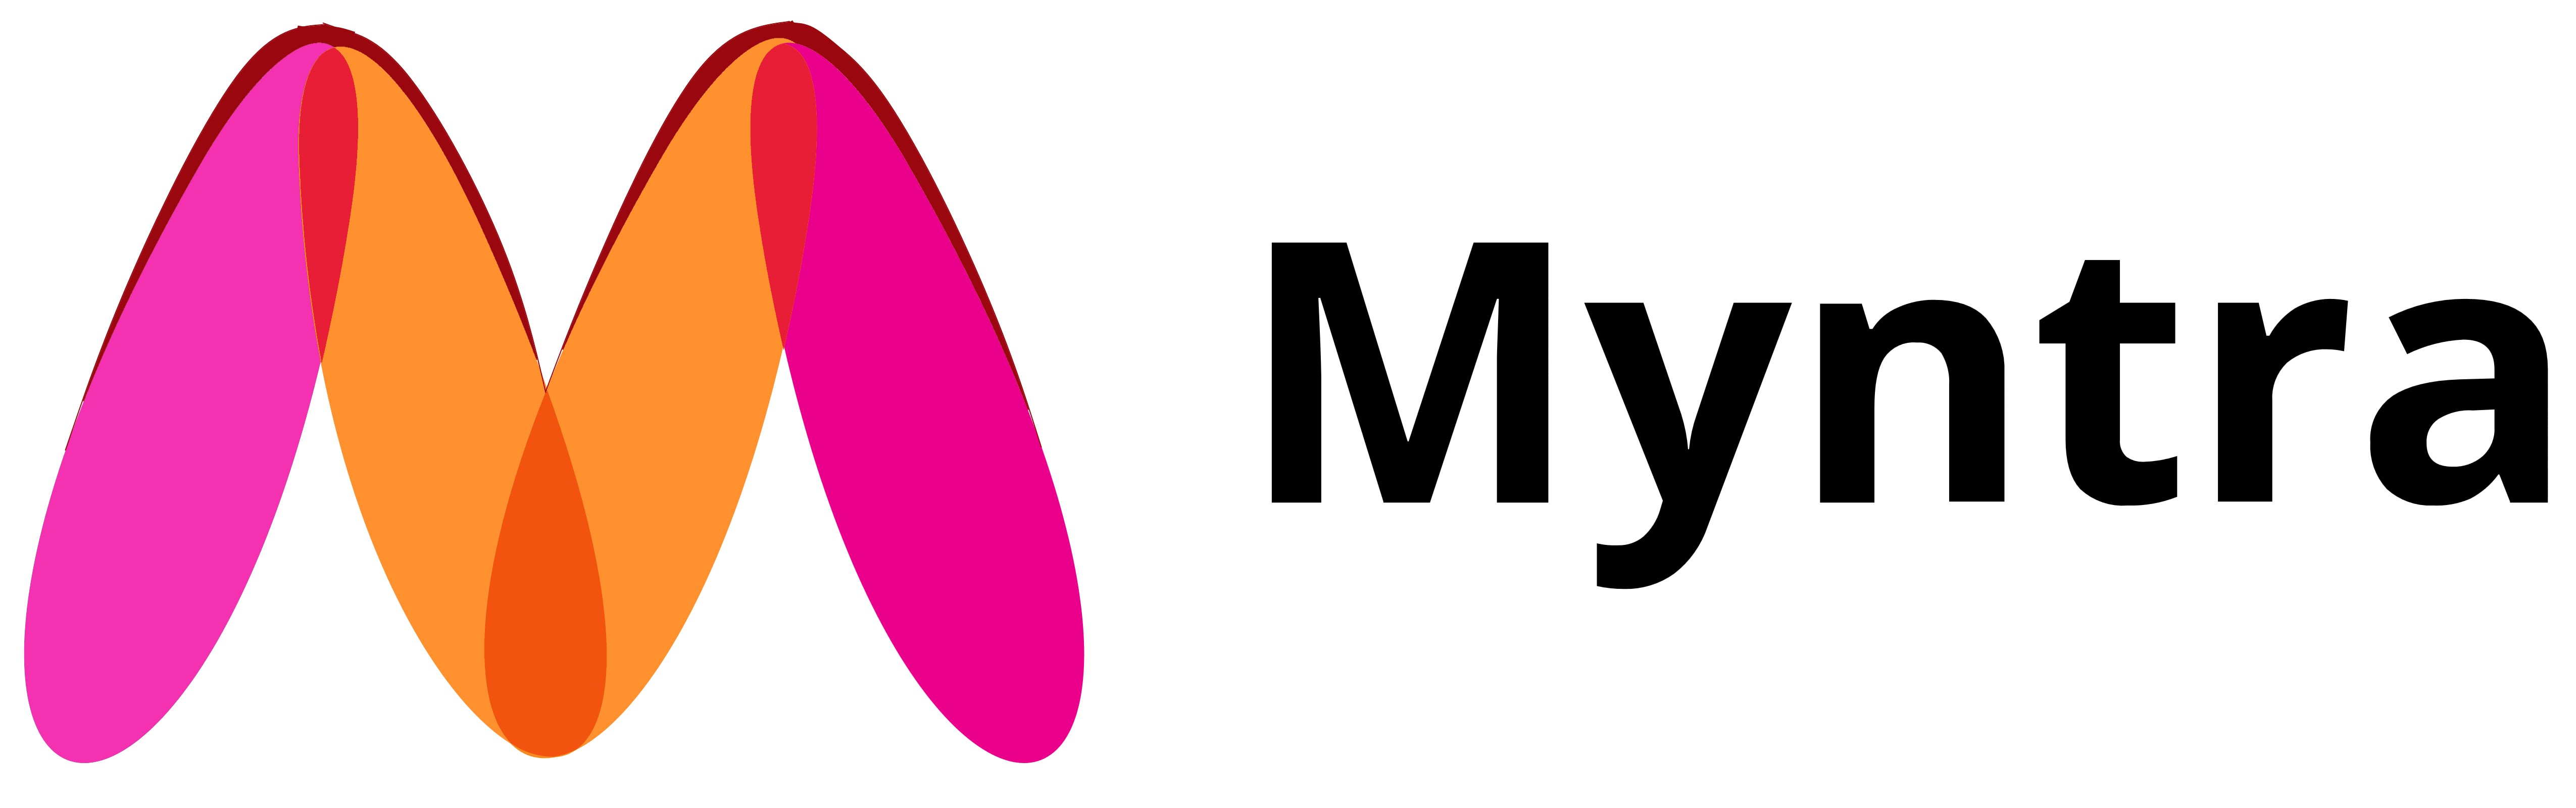 Myntra / Perficient, Inc.